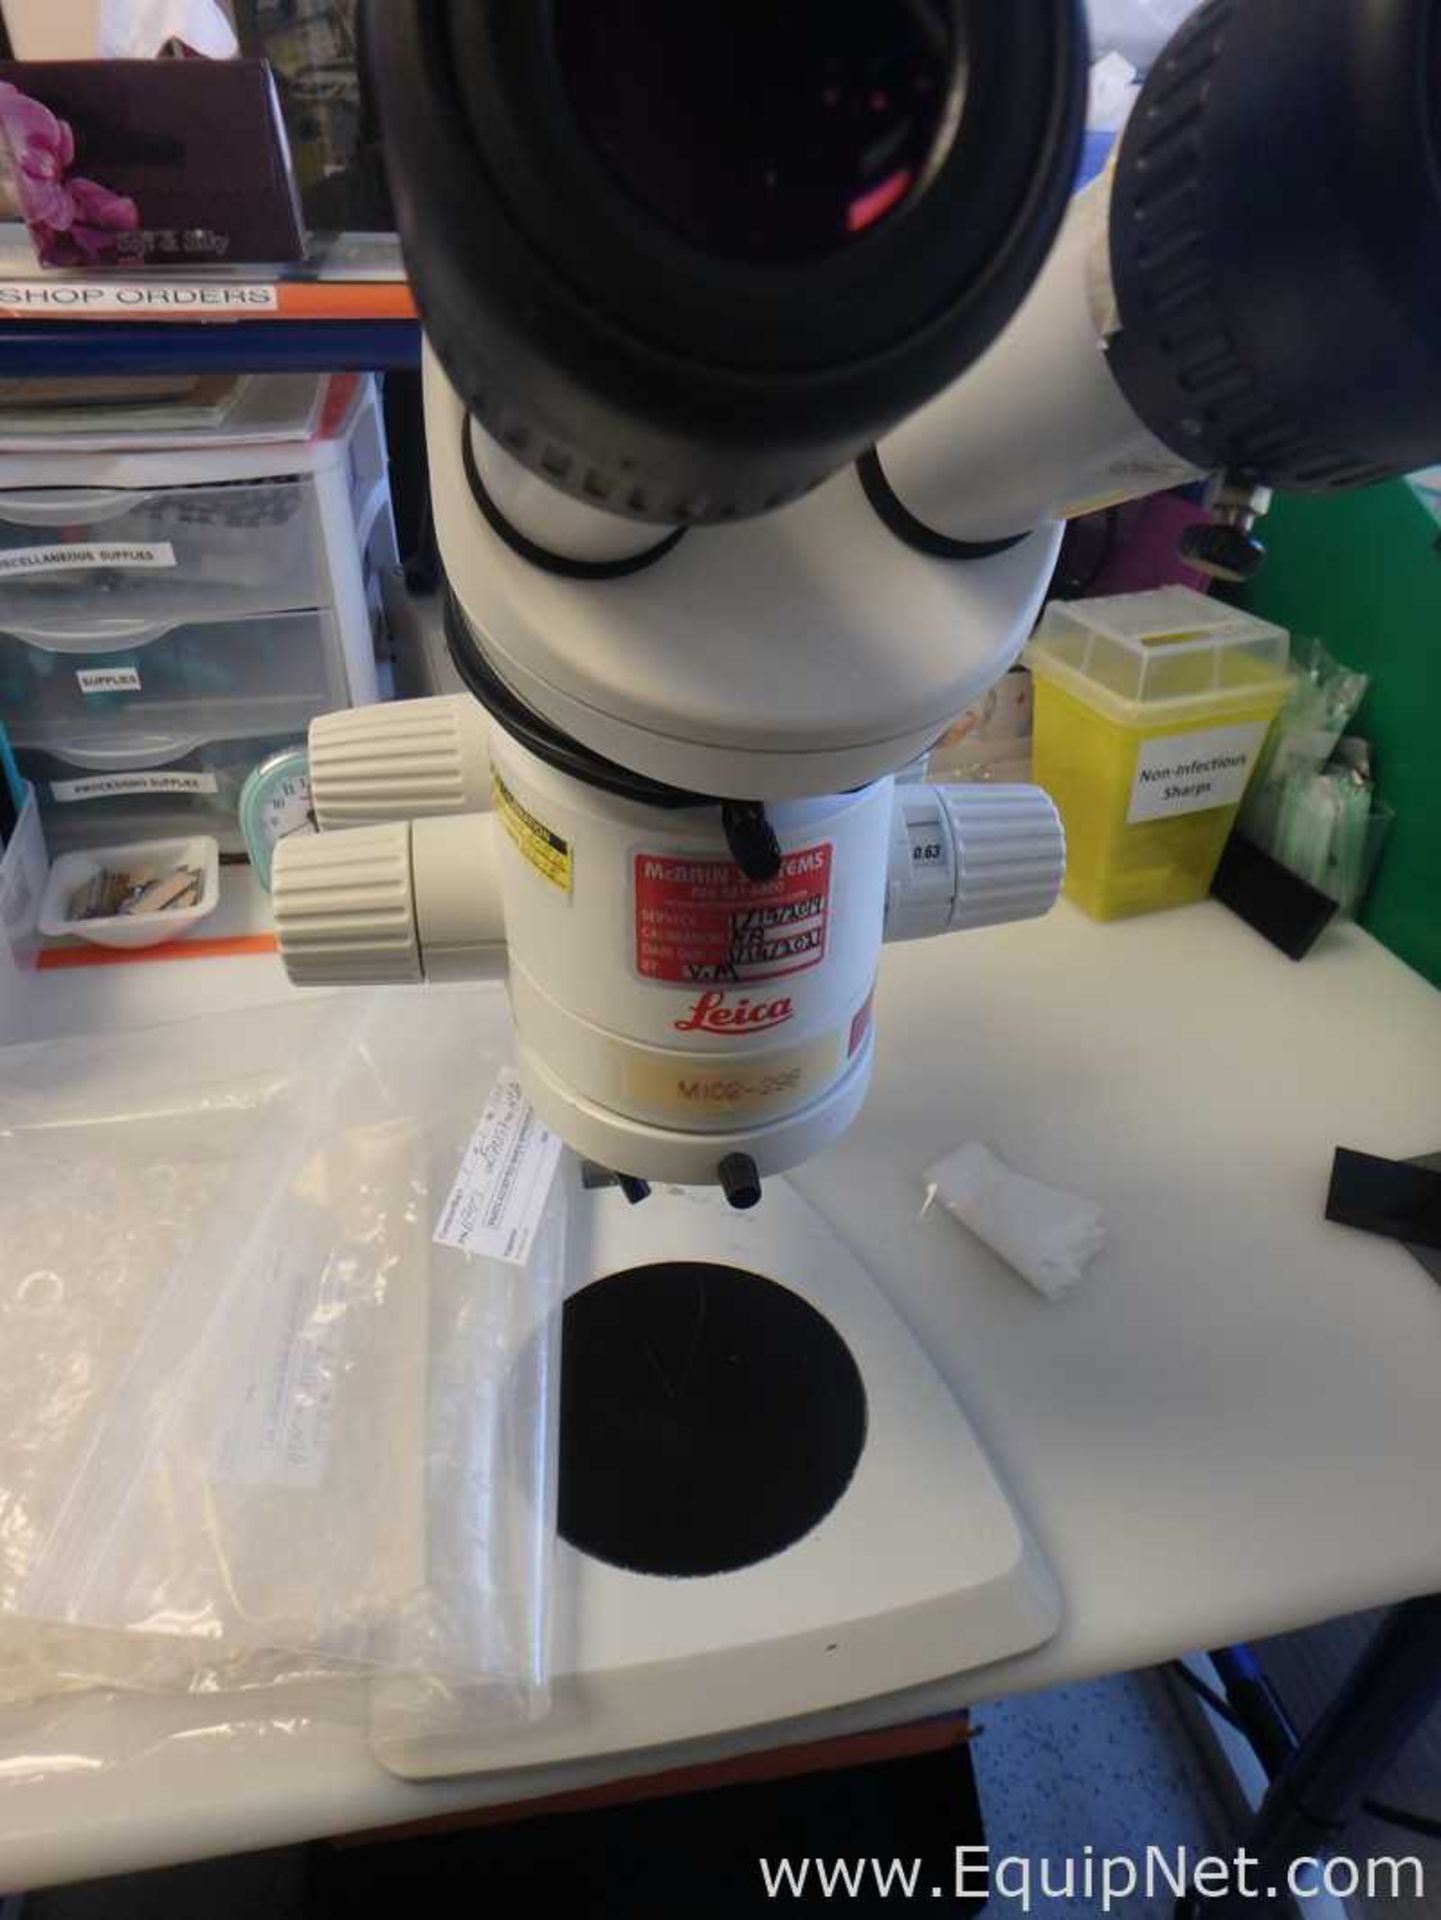 Leica MZ6 Microscope - Image 4 of 7